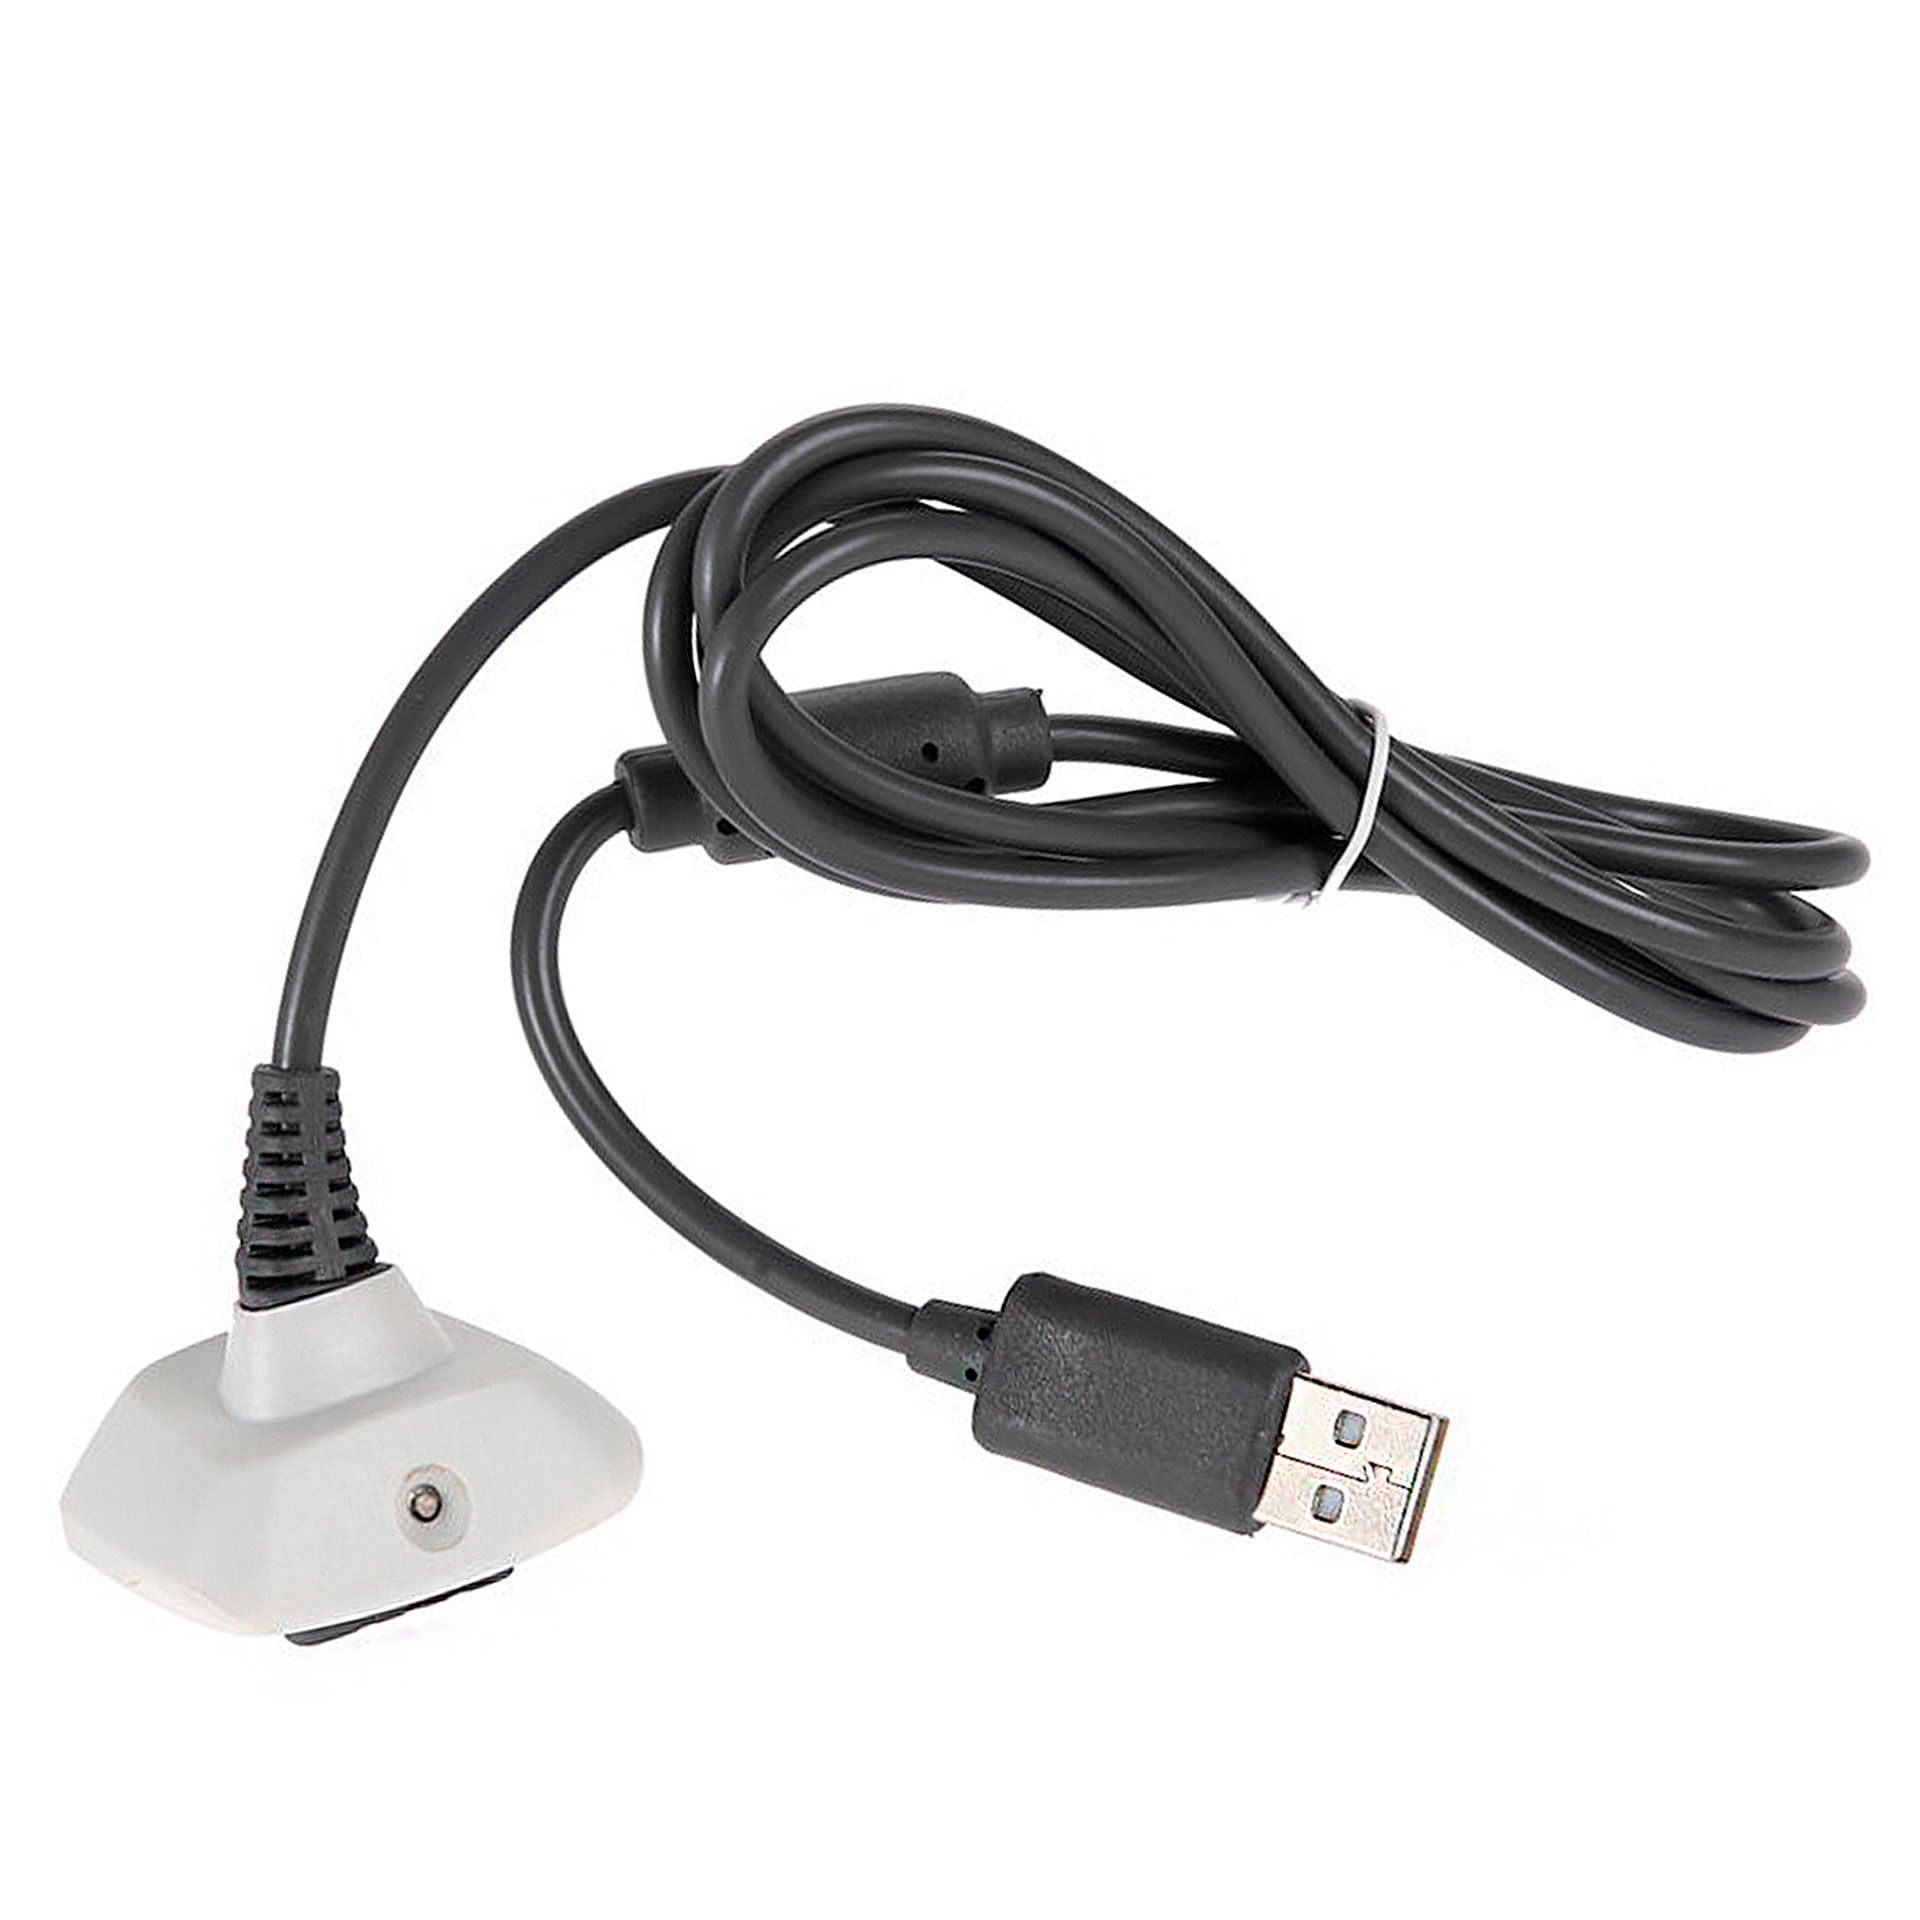 Mando con Cable Usb para Xbox 360 Pc Windows Joystick NJX301 Negro - Promart